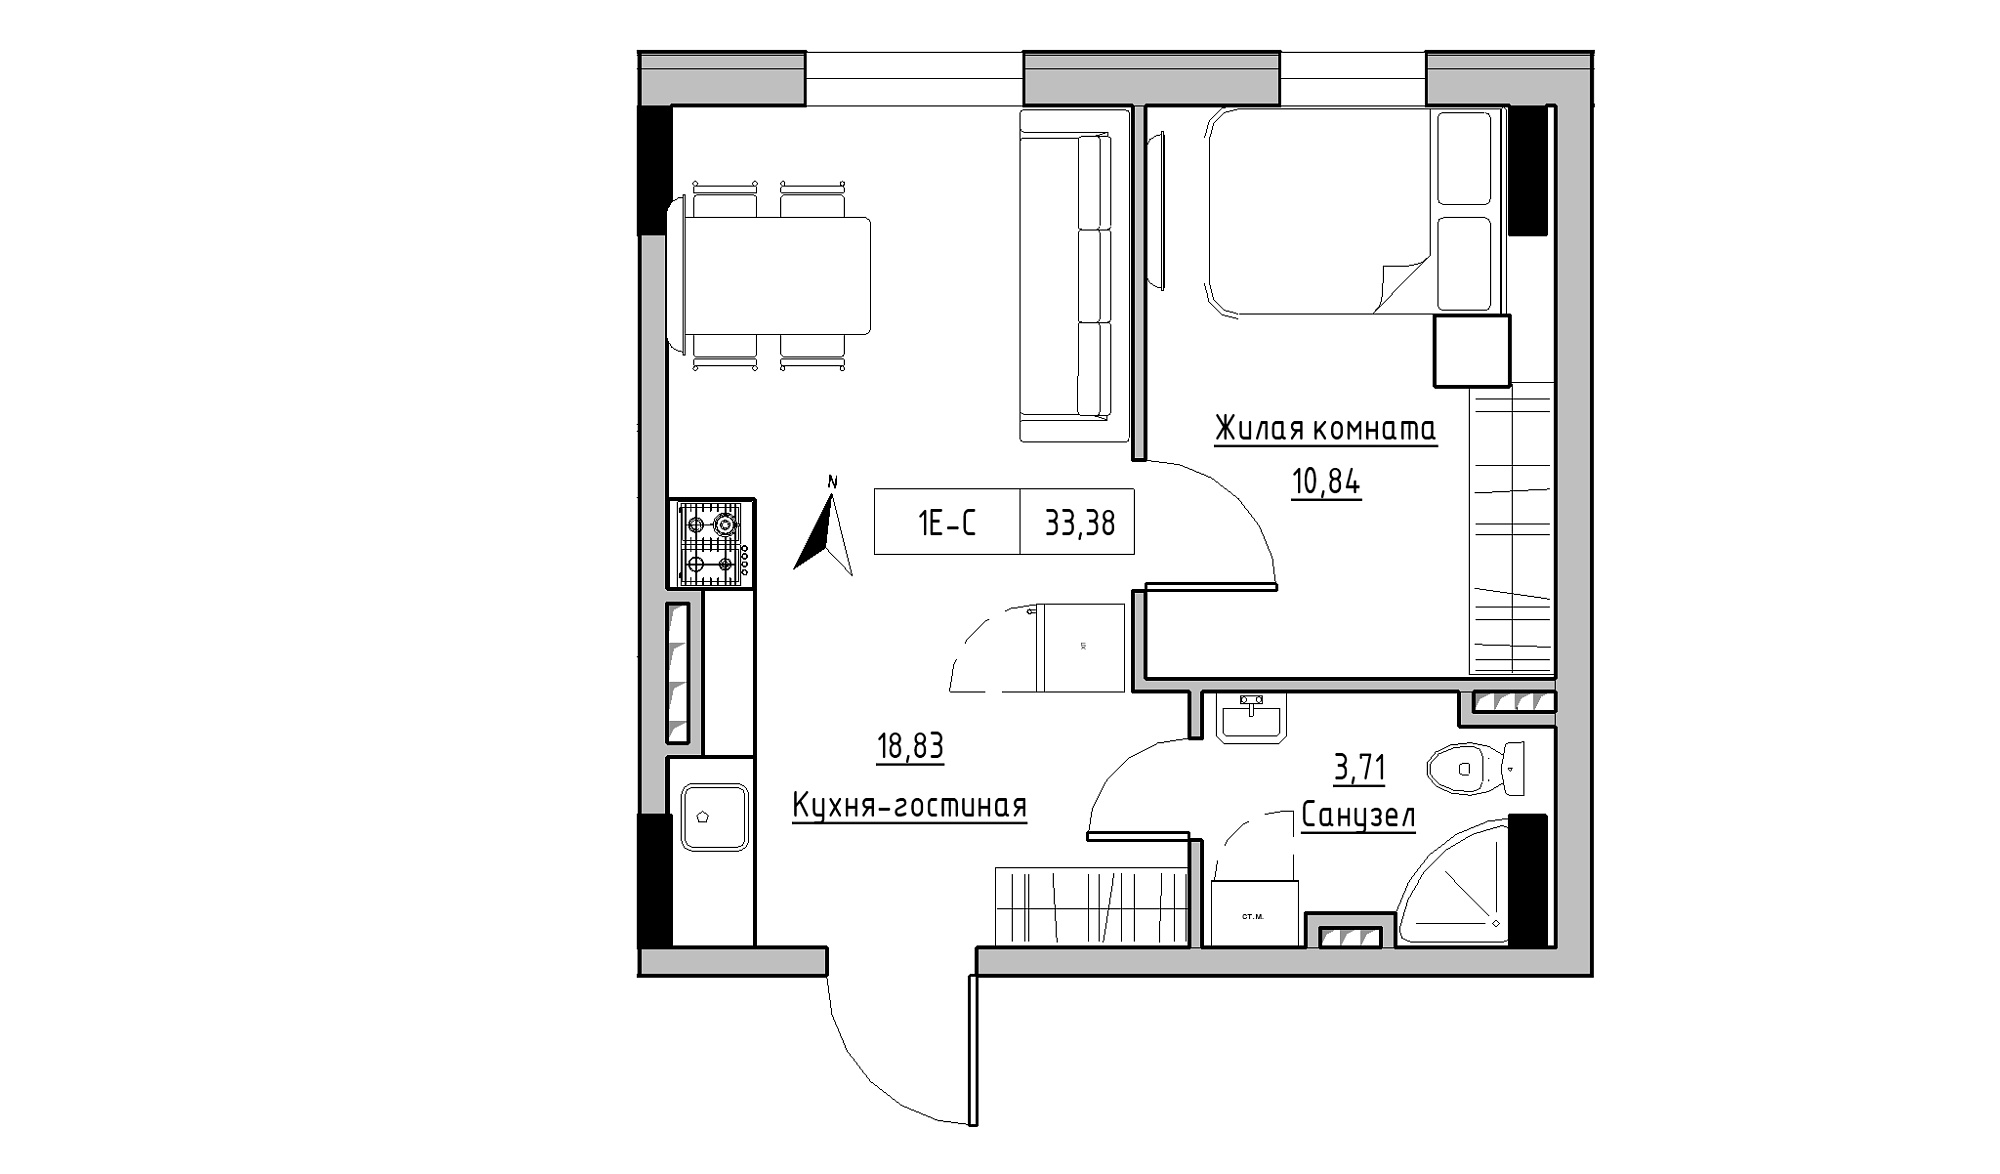 Planning 1-rm flats area 33.38m2, KS-025-03/0010.